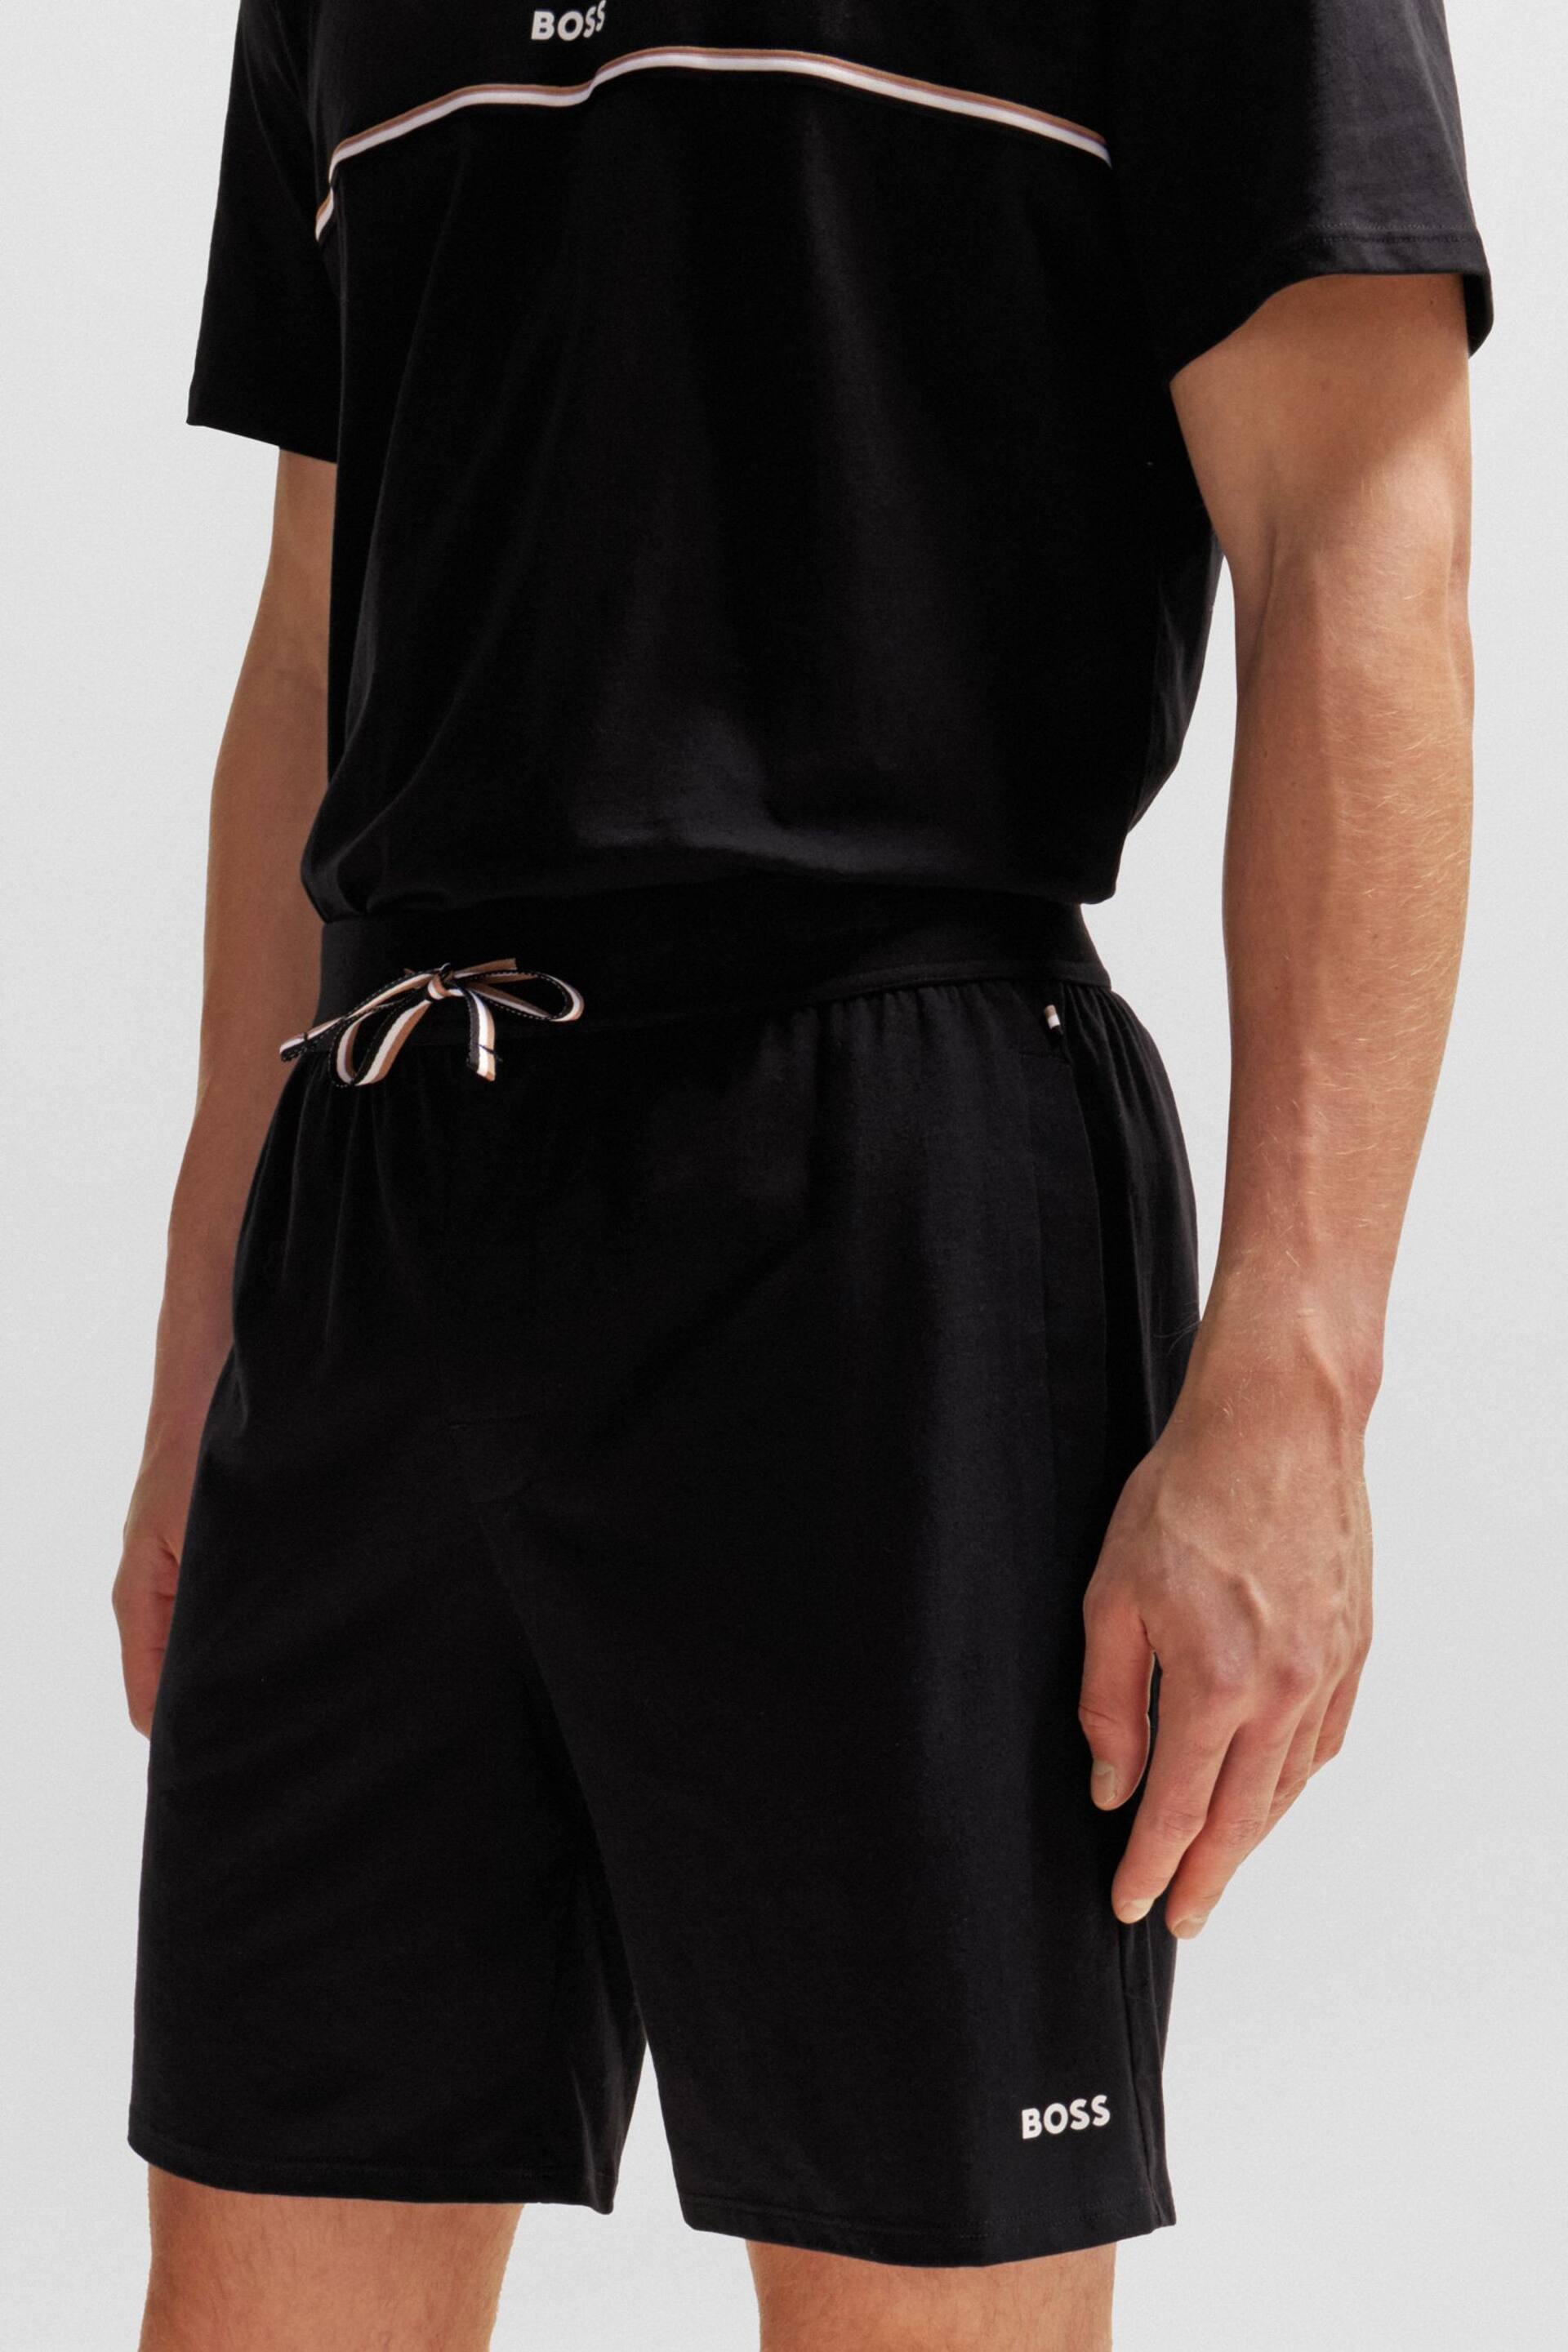 BOSS Black Stretch Cotton Pyjama Short - Image 3 of 5